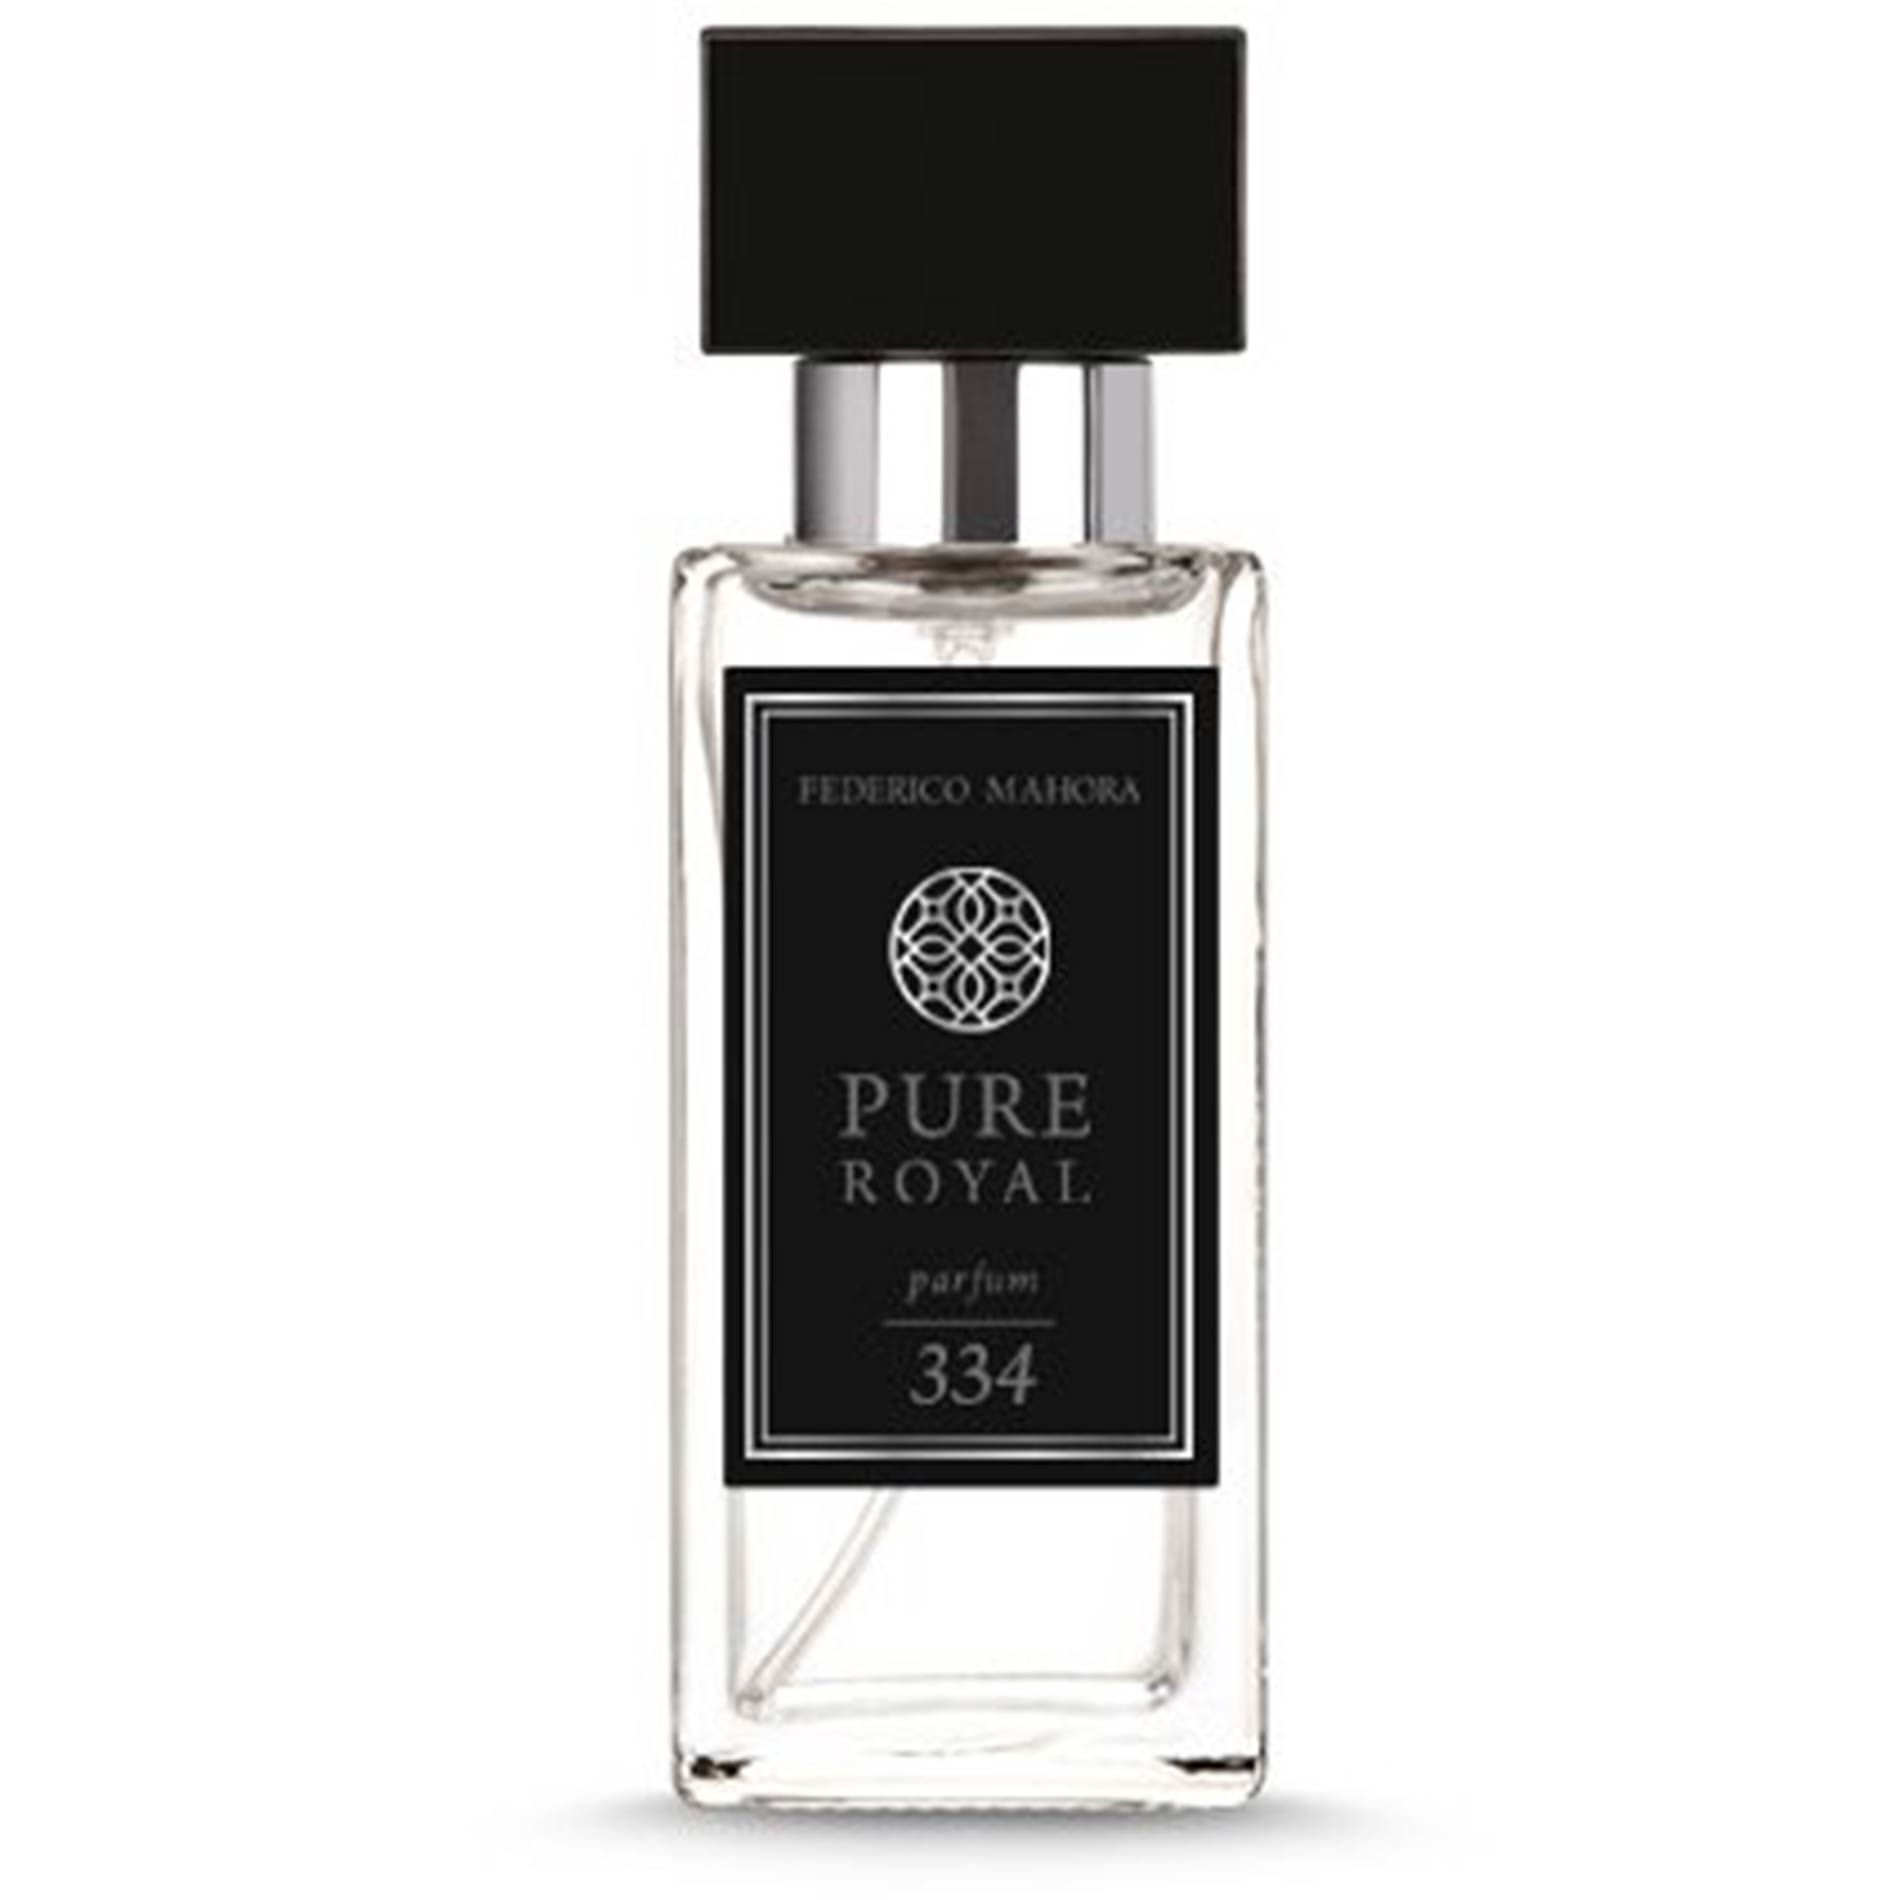 Pure Royal 334 Parfum by Federico Mahora